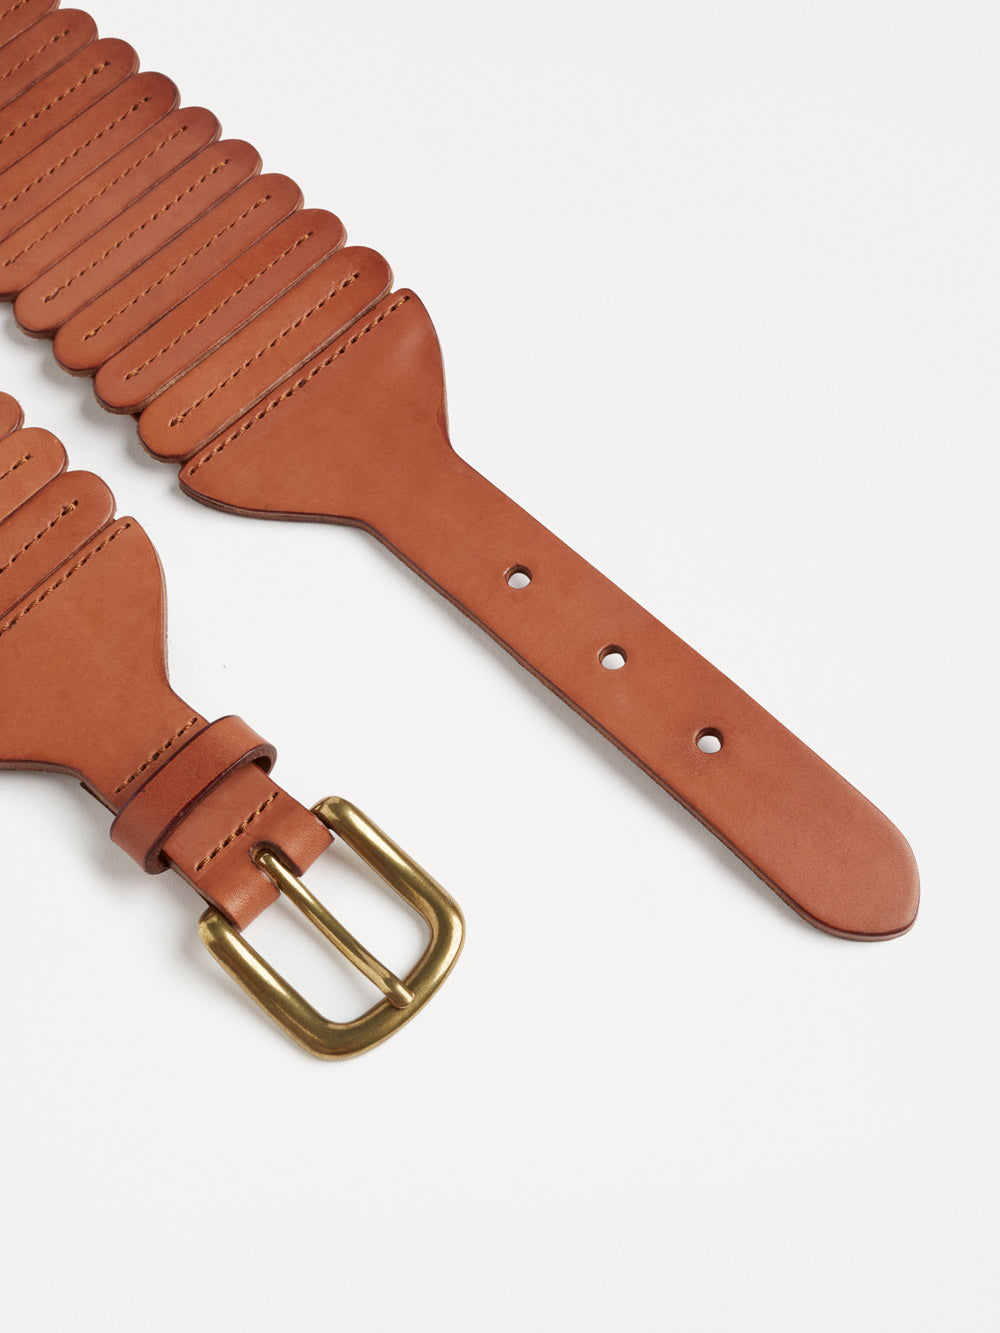 The Leather Waist Belt